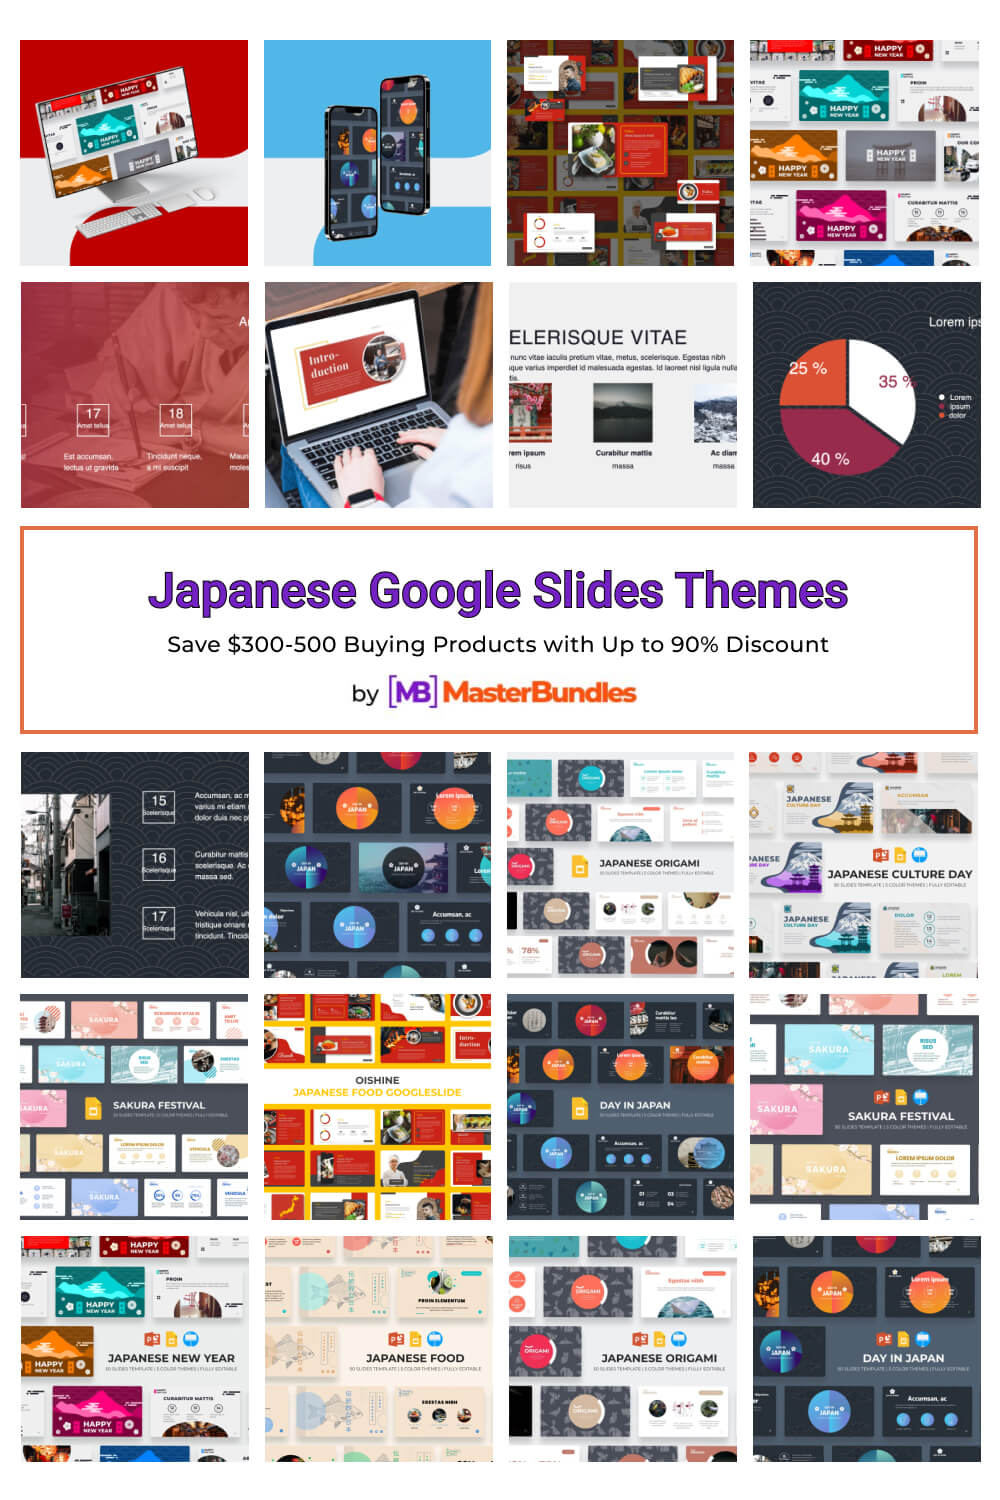 japanese google slides themes pinterest image.